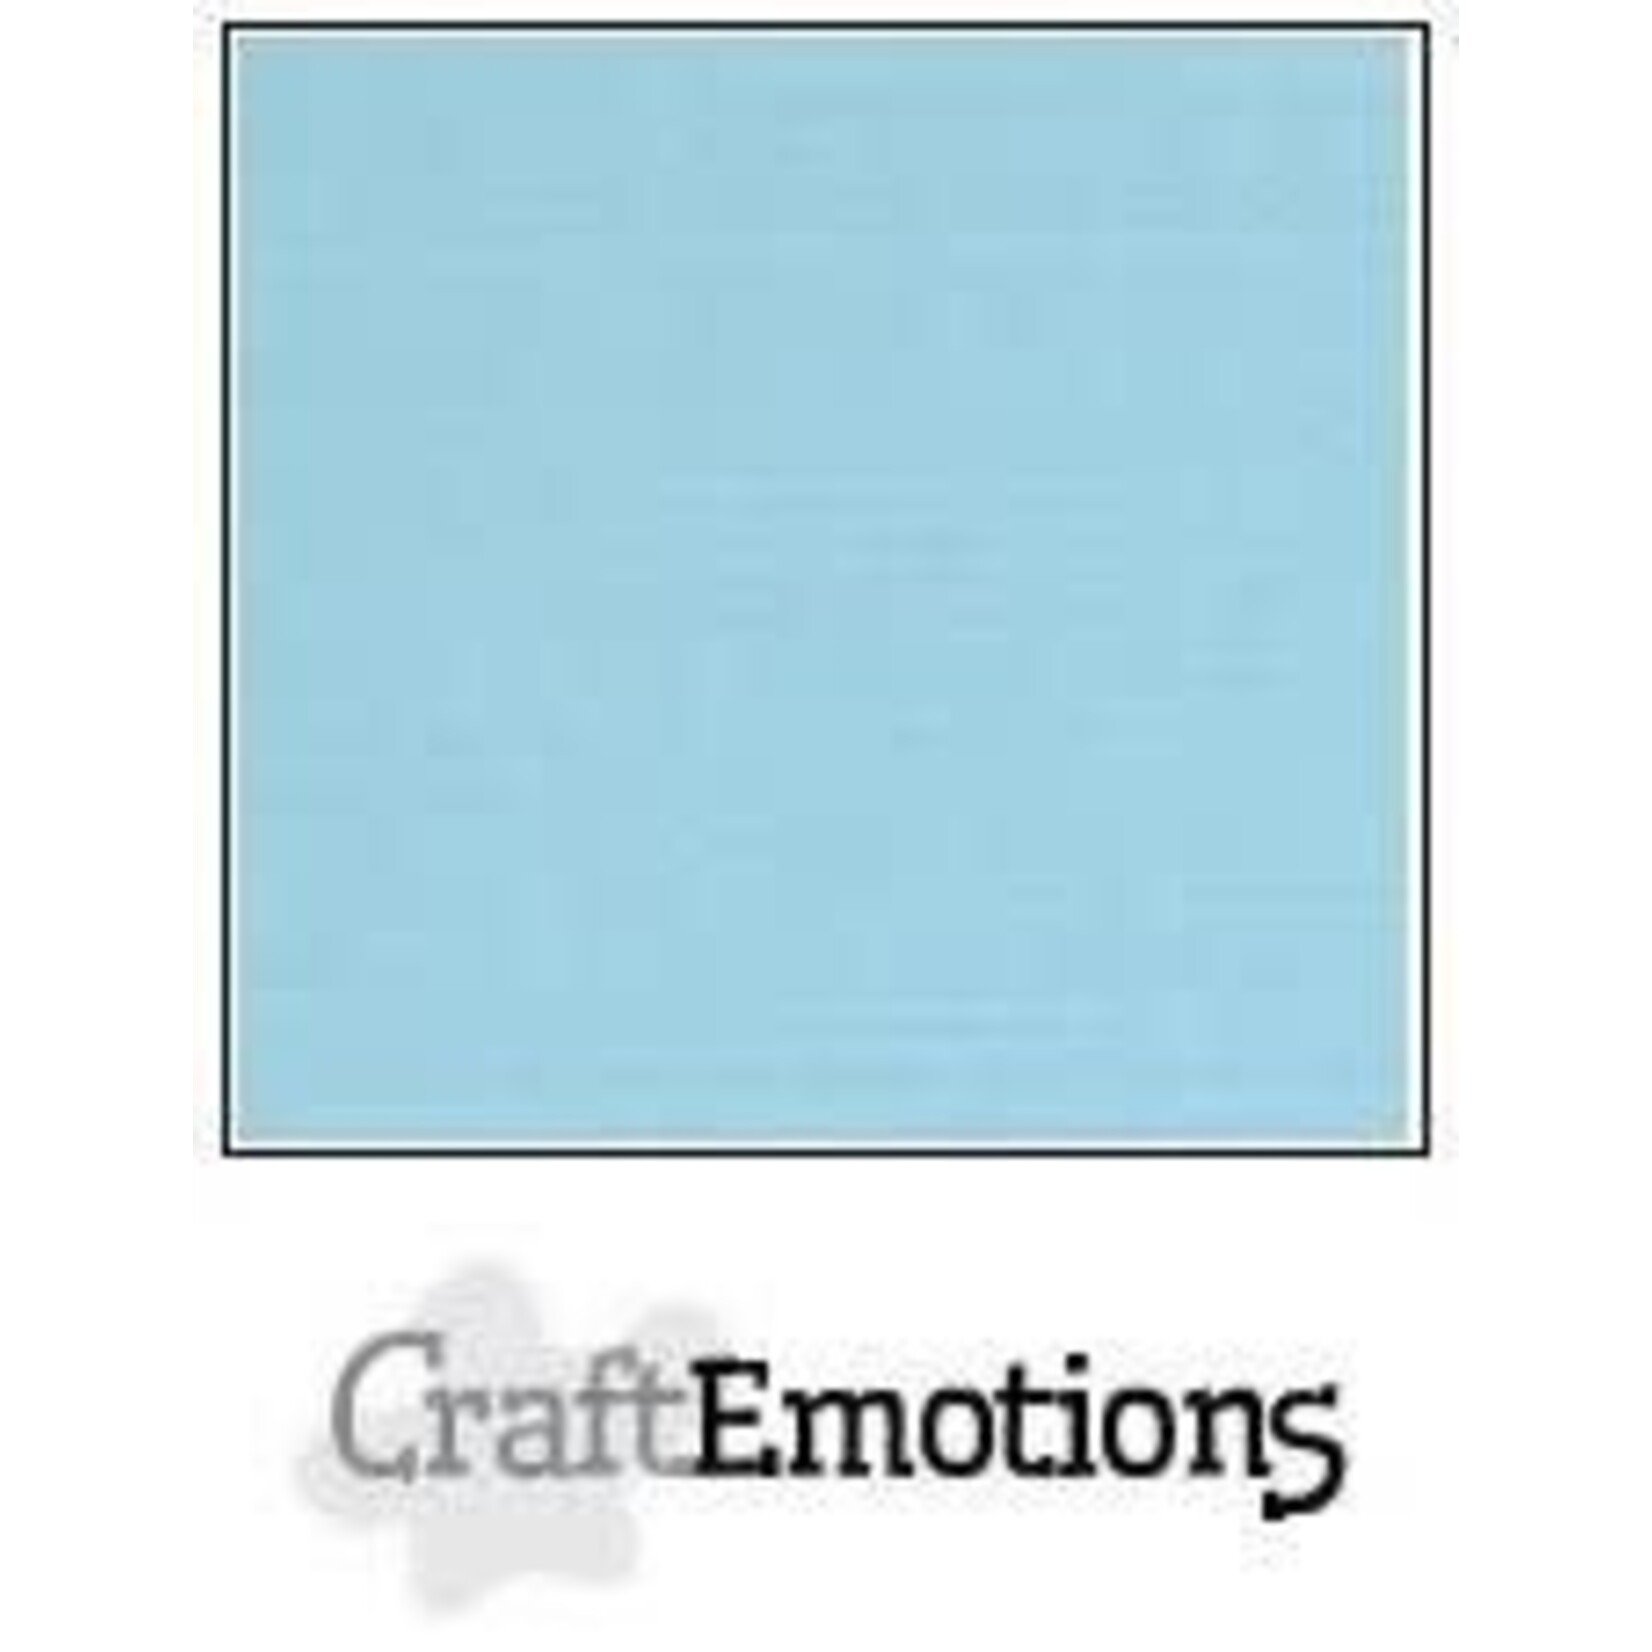 Craftemotions CraftEmotions linnenkarton 10 vel lichtblauw 27x13,5cm 250gr